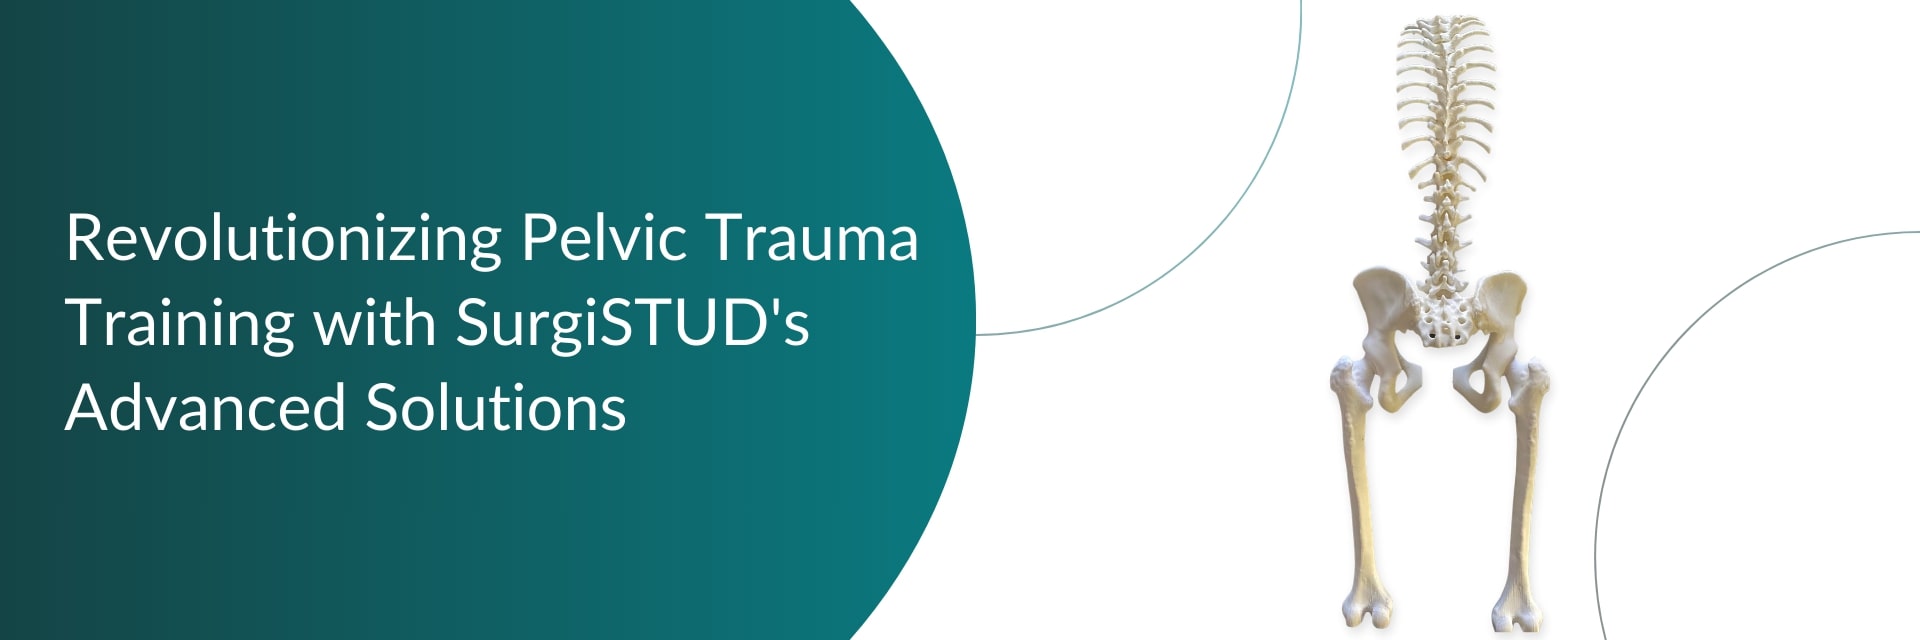 Revolutionizing Pelvic Trauma Training with SurgiSTUD's Advanced Solutions